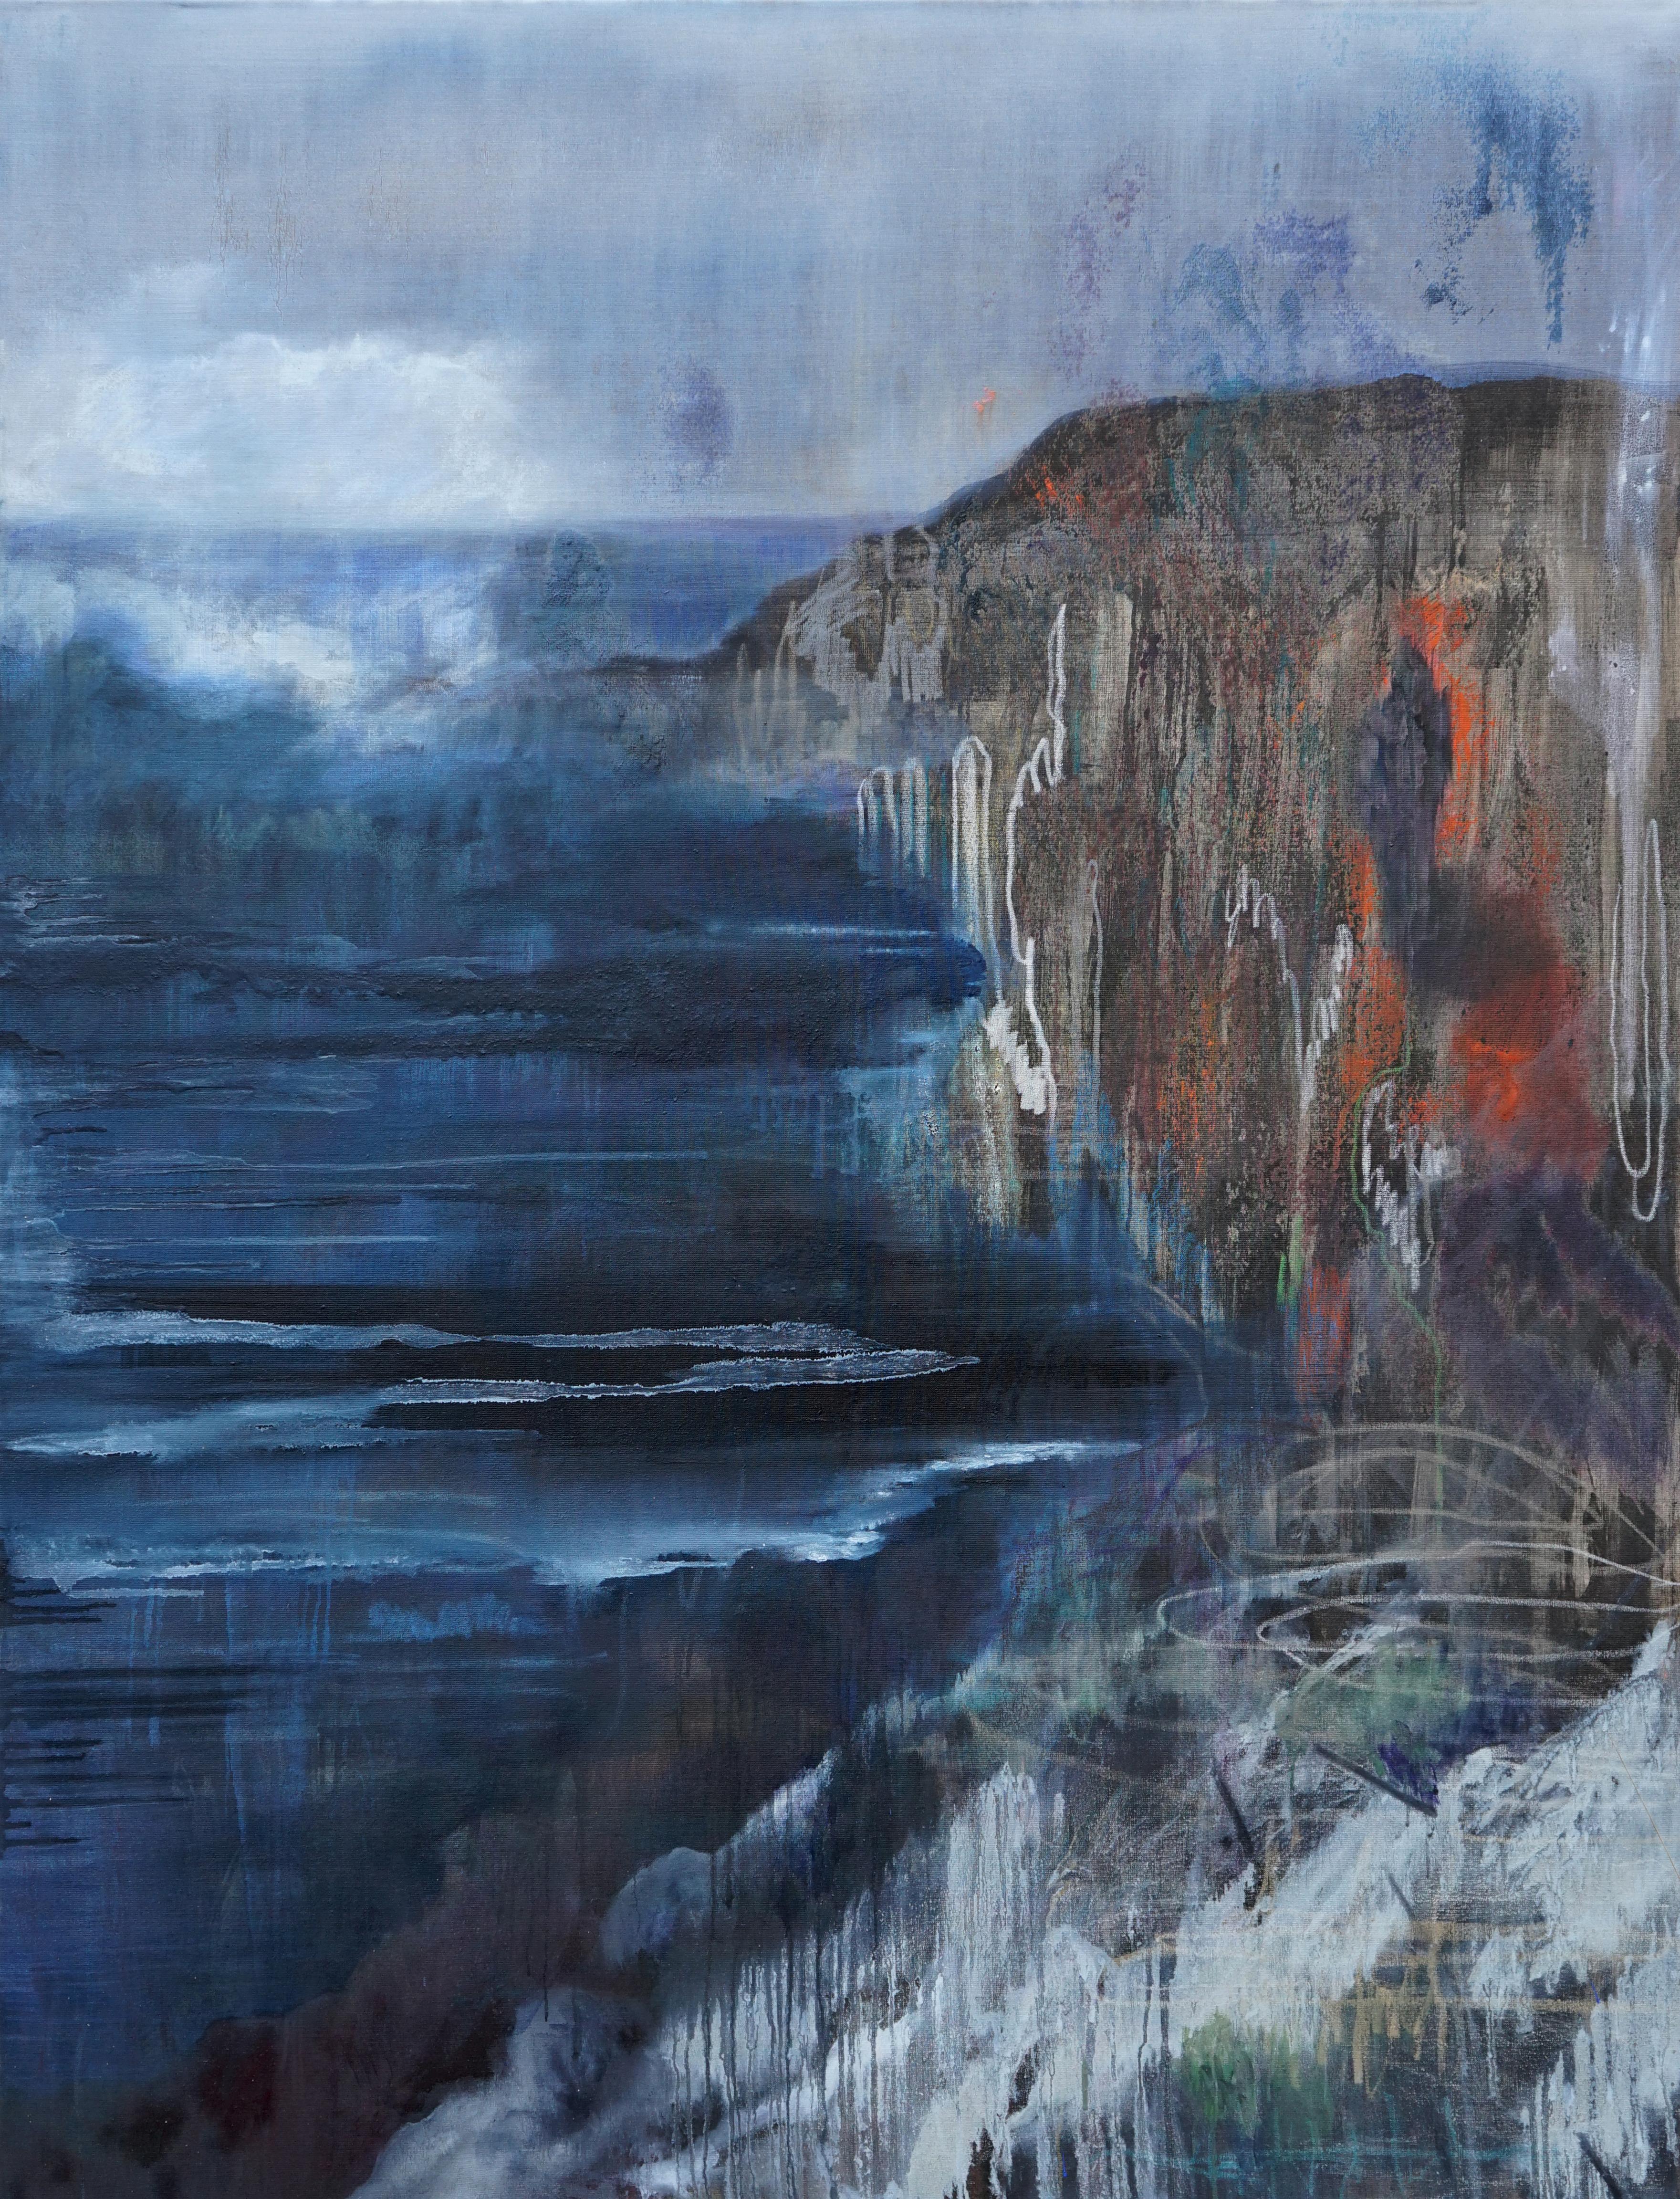 Aleksandra Batura Landscape Painting - The Bay - Large Format Contemporary Nature Oil Painting, Landscape, Sea View